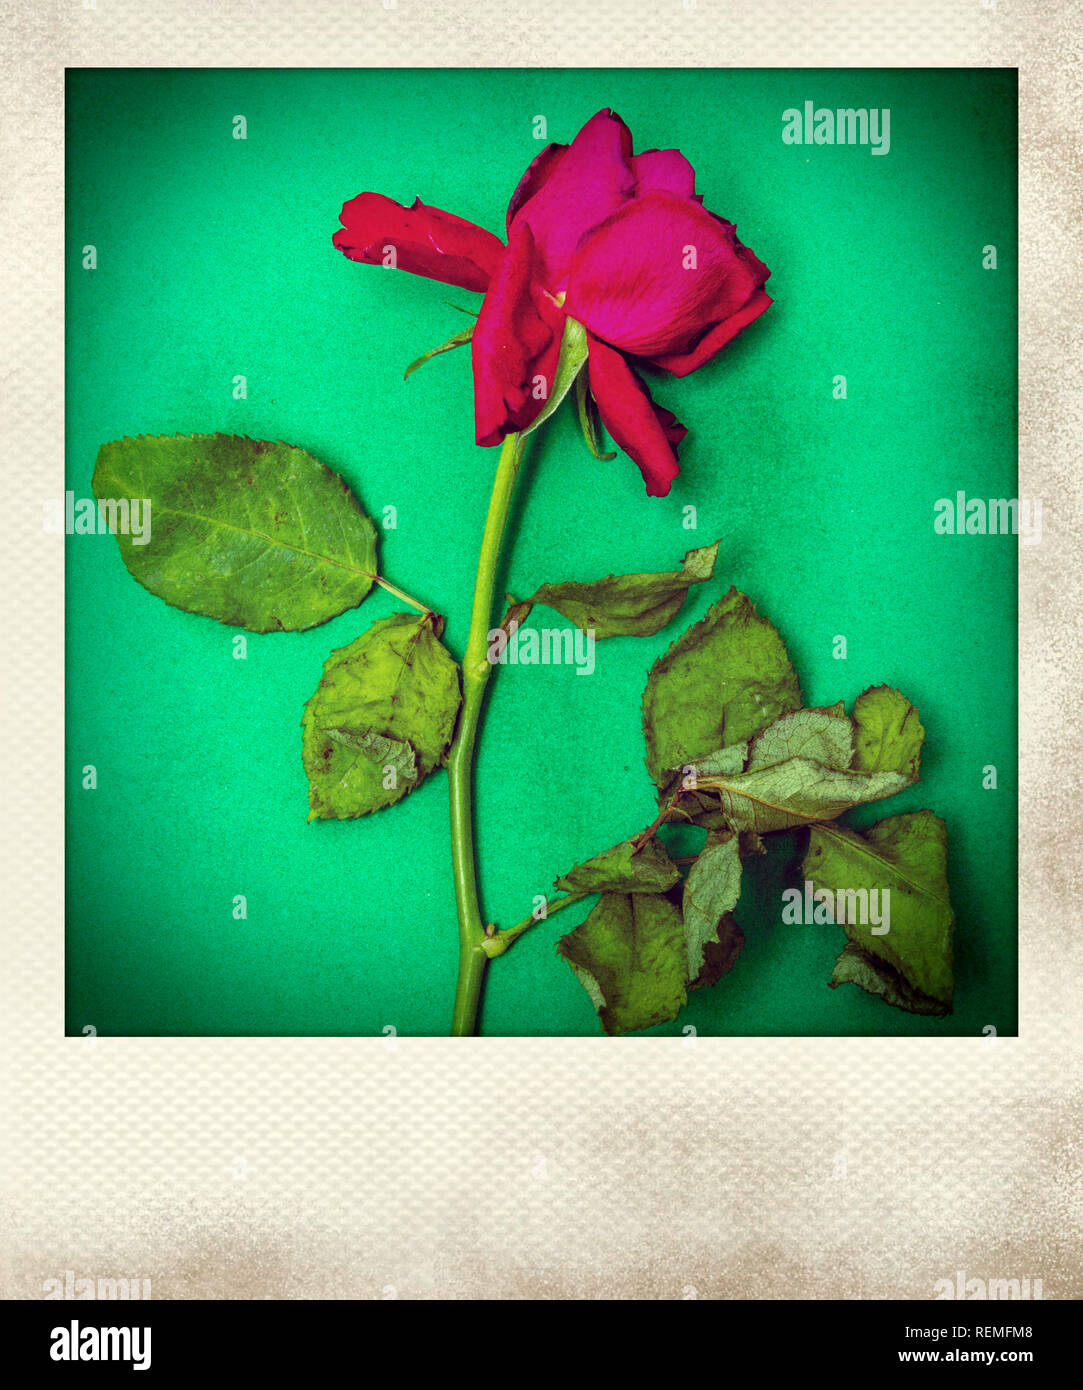 Polaroid effect of rose flower Stock Photo - Alamy